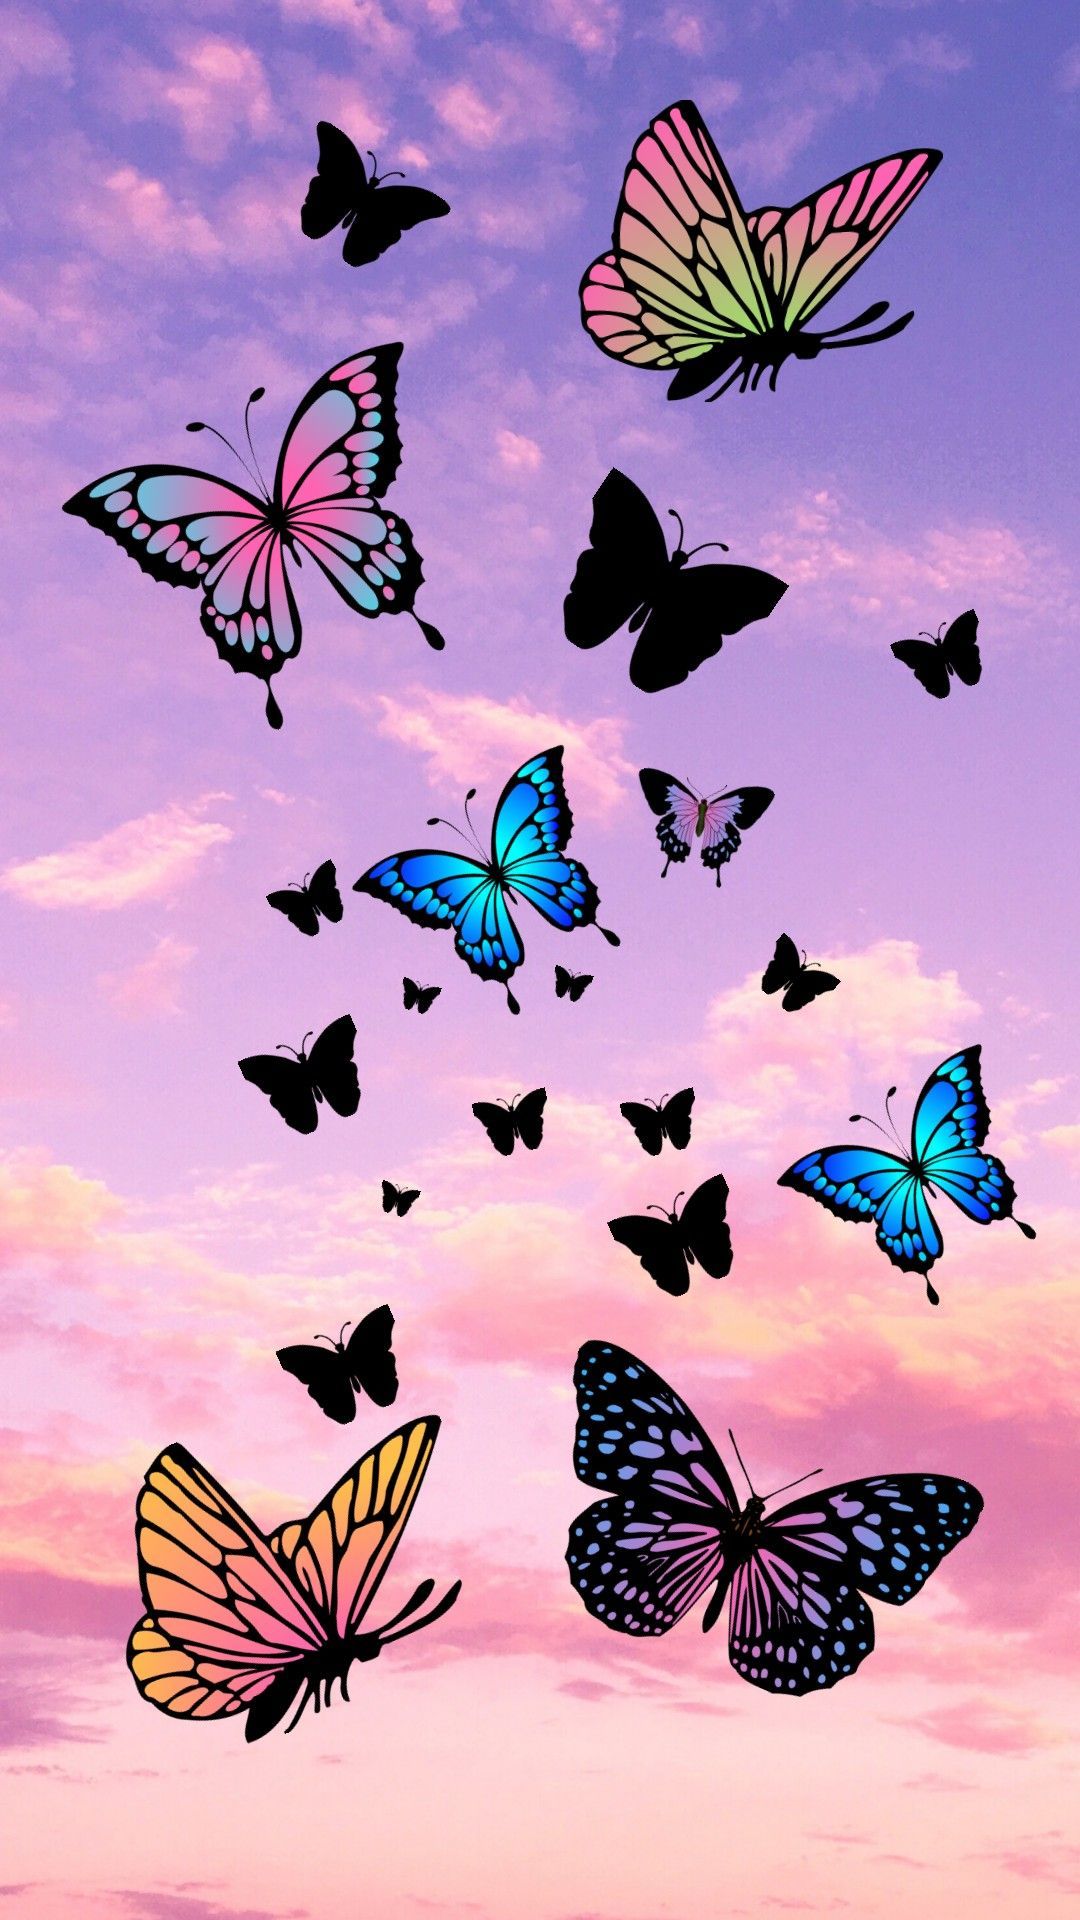 Butterflies in the pink sky